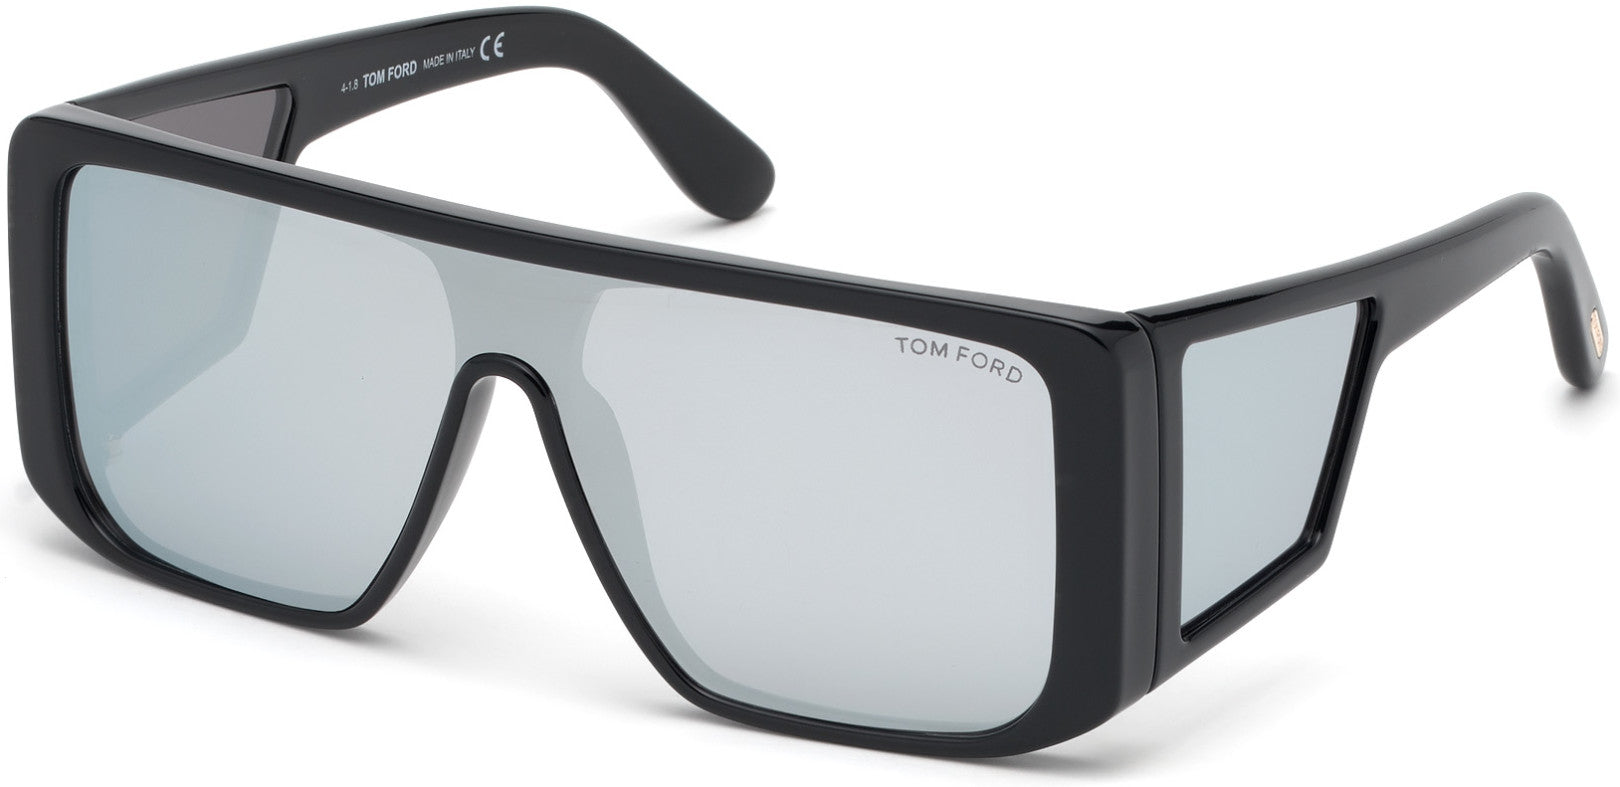 Tom Ford FT0710 Atticus Geometric Sunglasses 01C-01C - Shiny Black, Shiny Rose Gold / Smoke W. Silver Flash Lenses